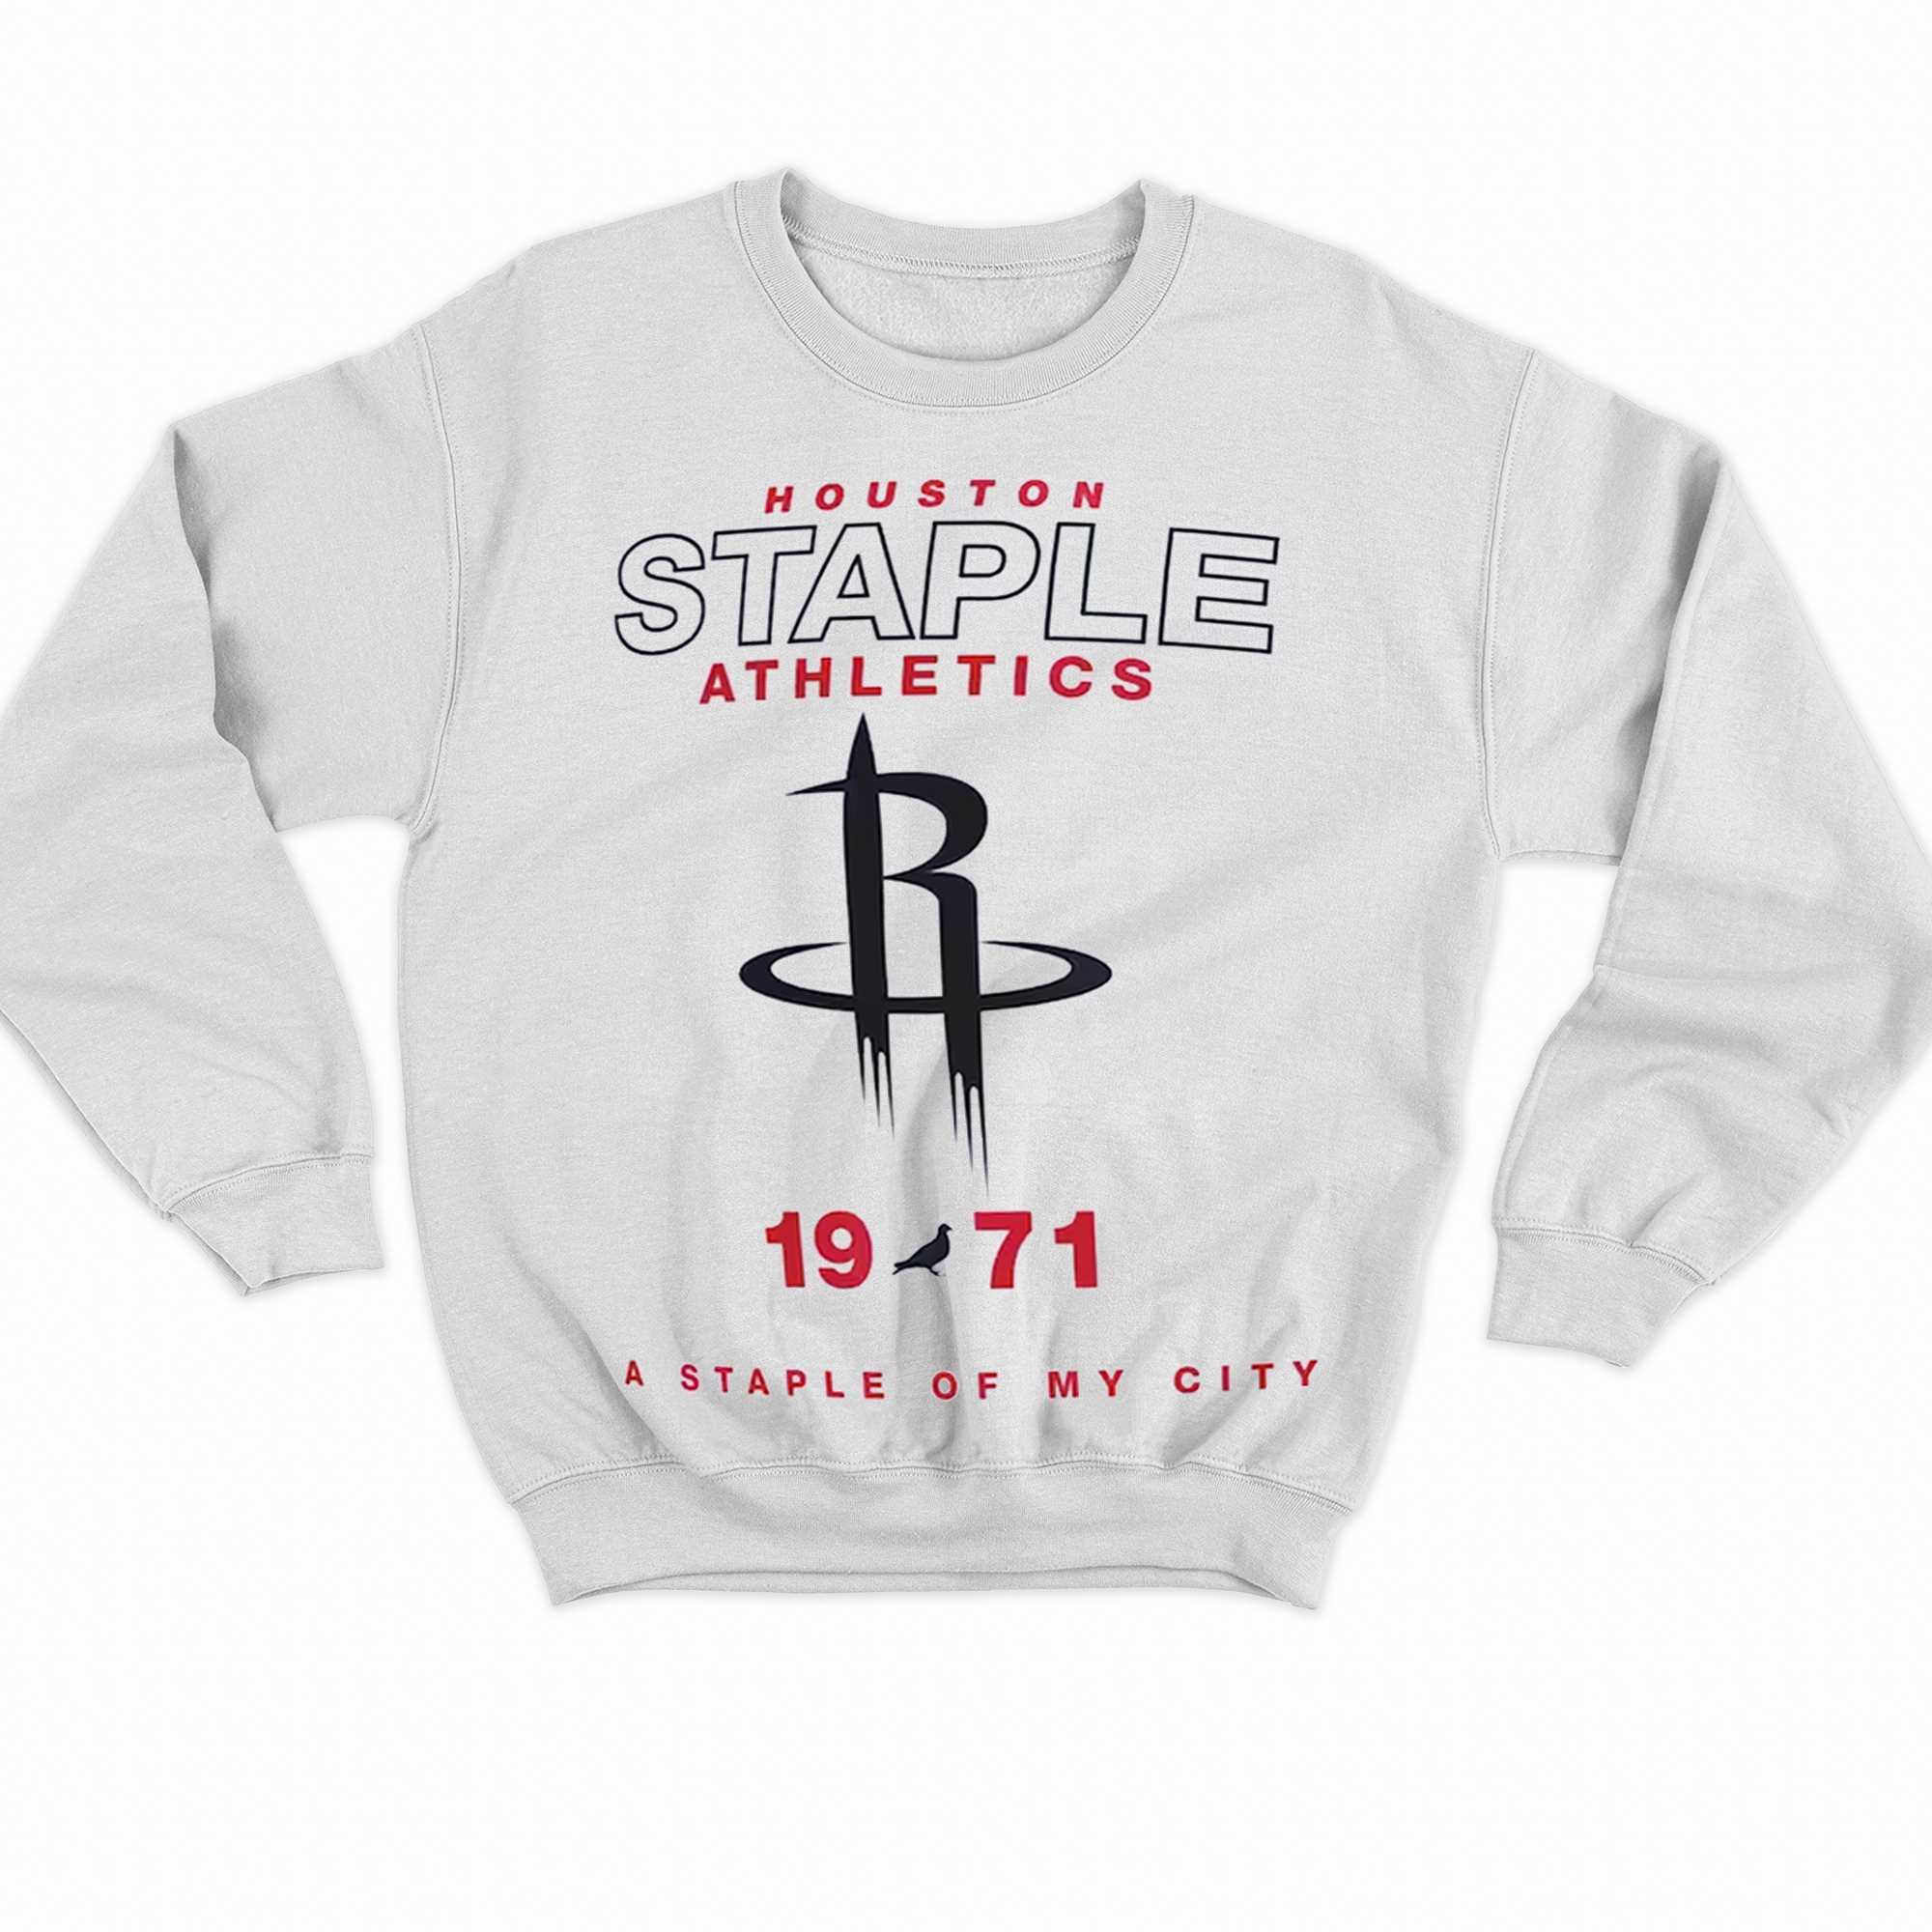 Shirts & Tops, Houston Rockets Hoodie Size Kids Xl